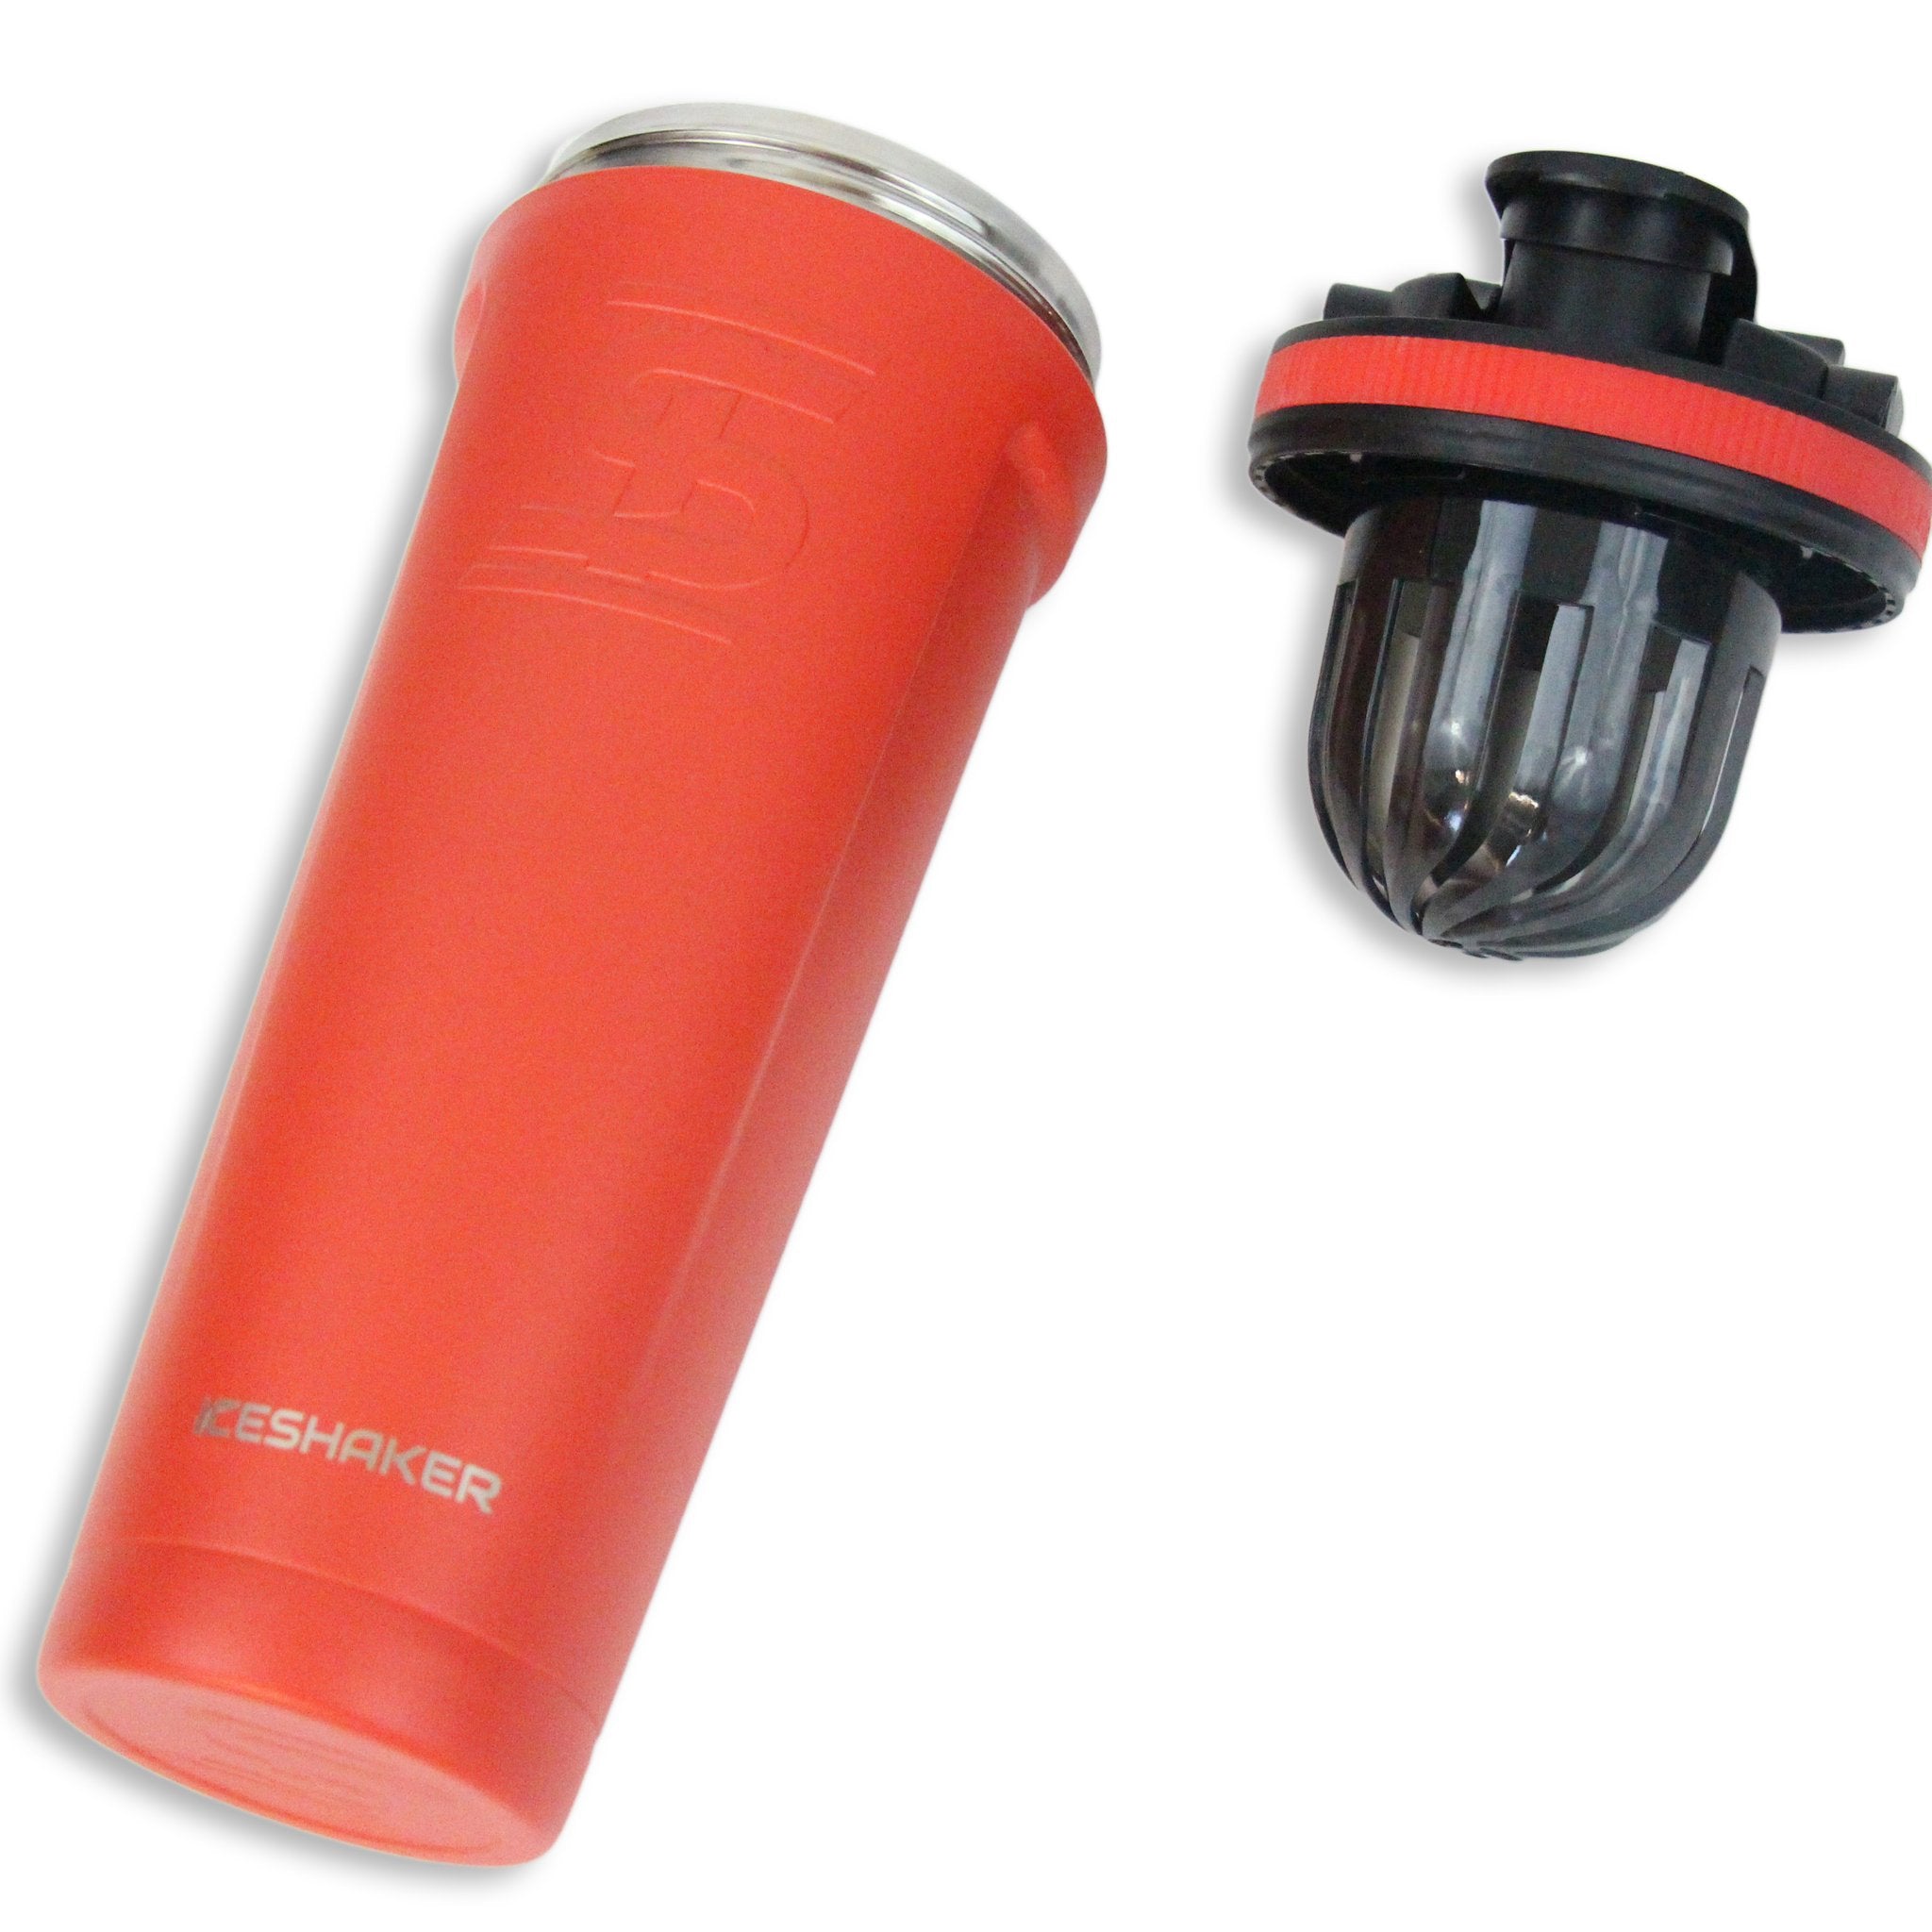 Iceshaker Termo Shaker 1 litro Personalizado Rojo - https://www.iceshaker.com/ https://www.iceshaker.com.mx https://www.iceshaker.com.mx https://www.iceshaker.com/